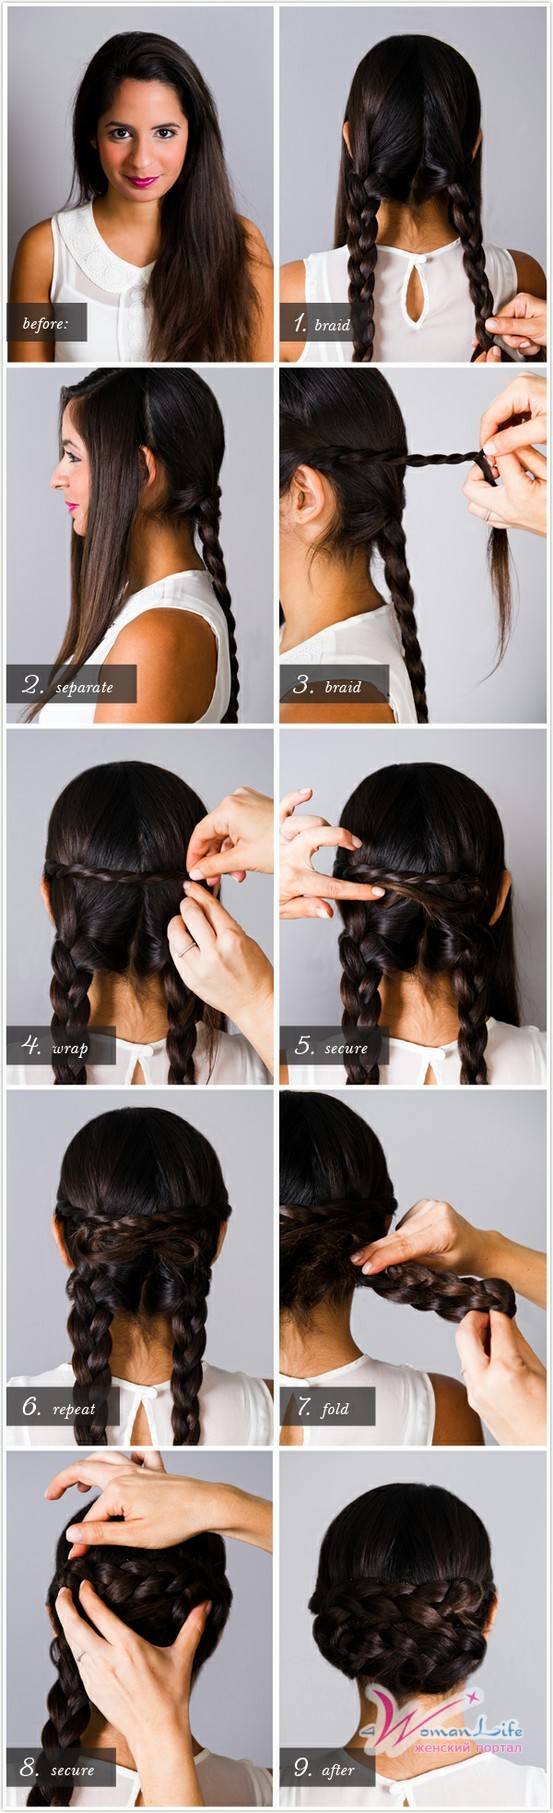 JamAdvice_com_ua_hairstyles-with-braids-for-long-hair-1